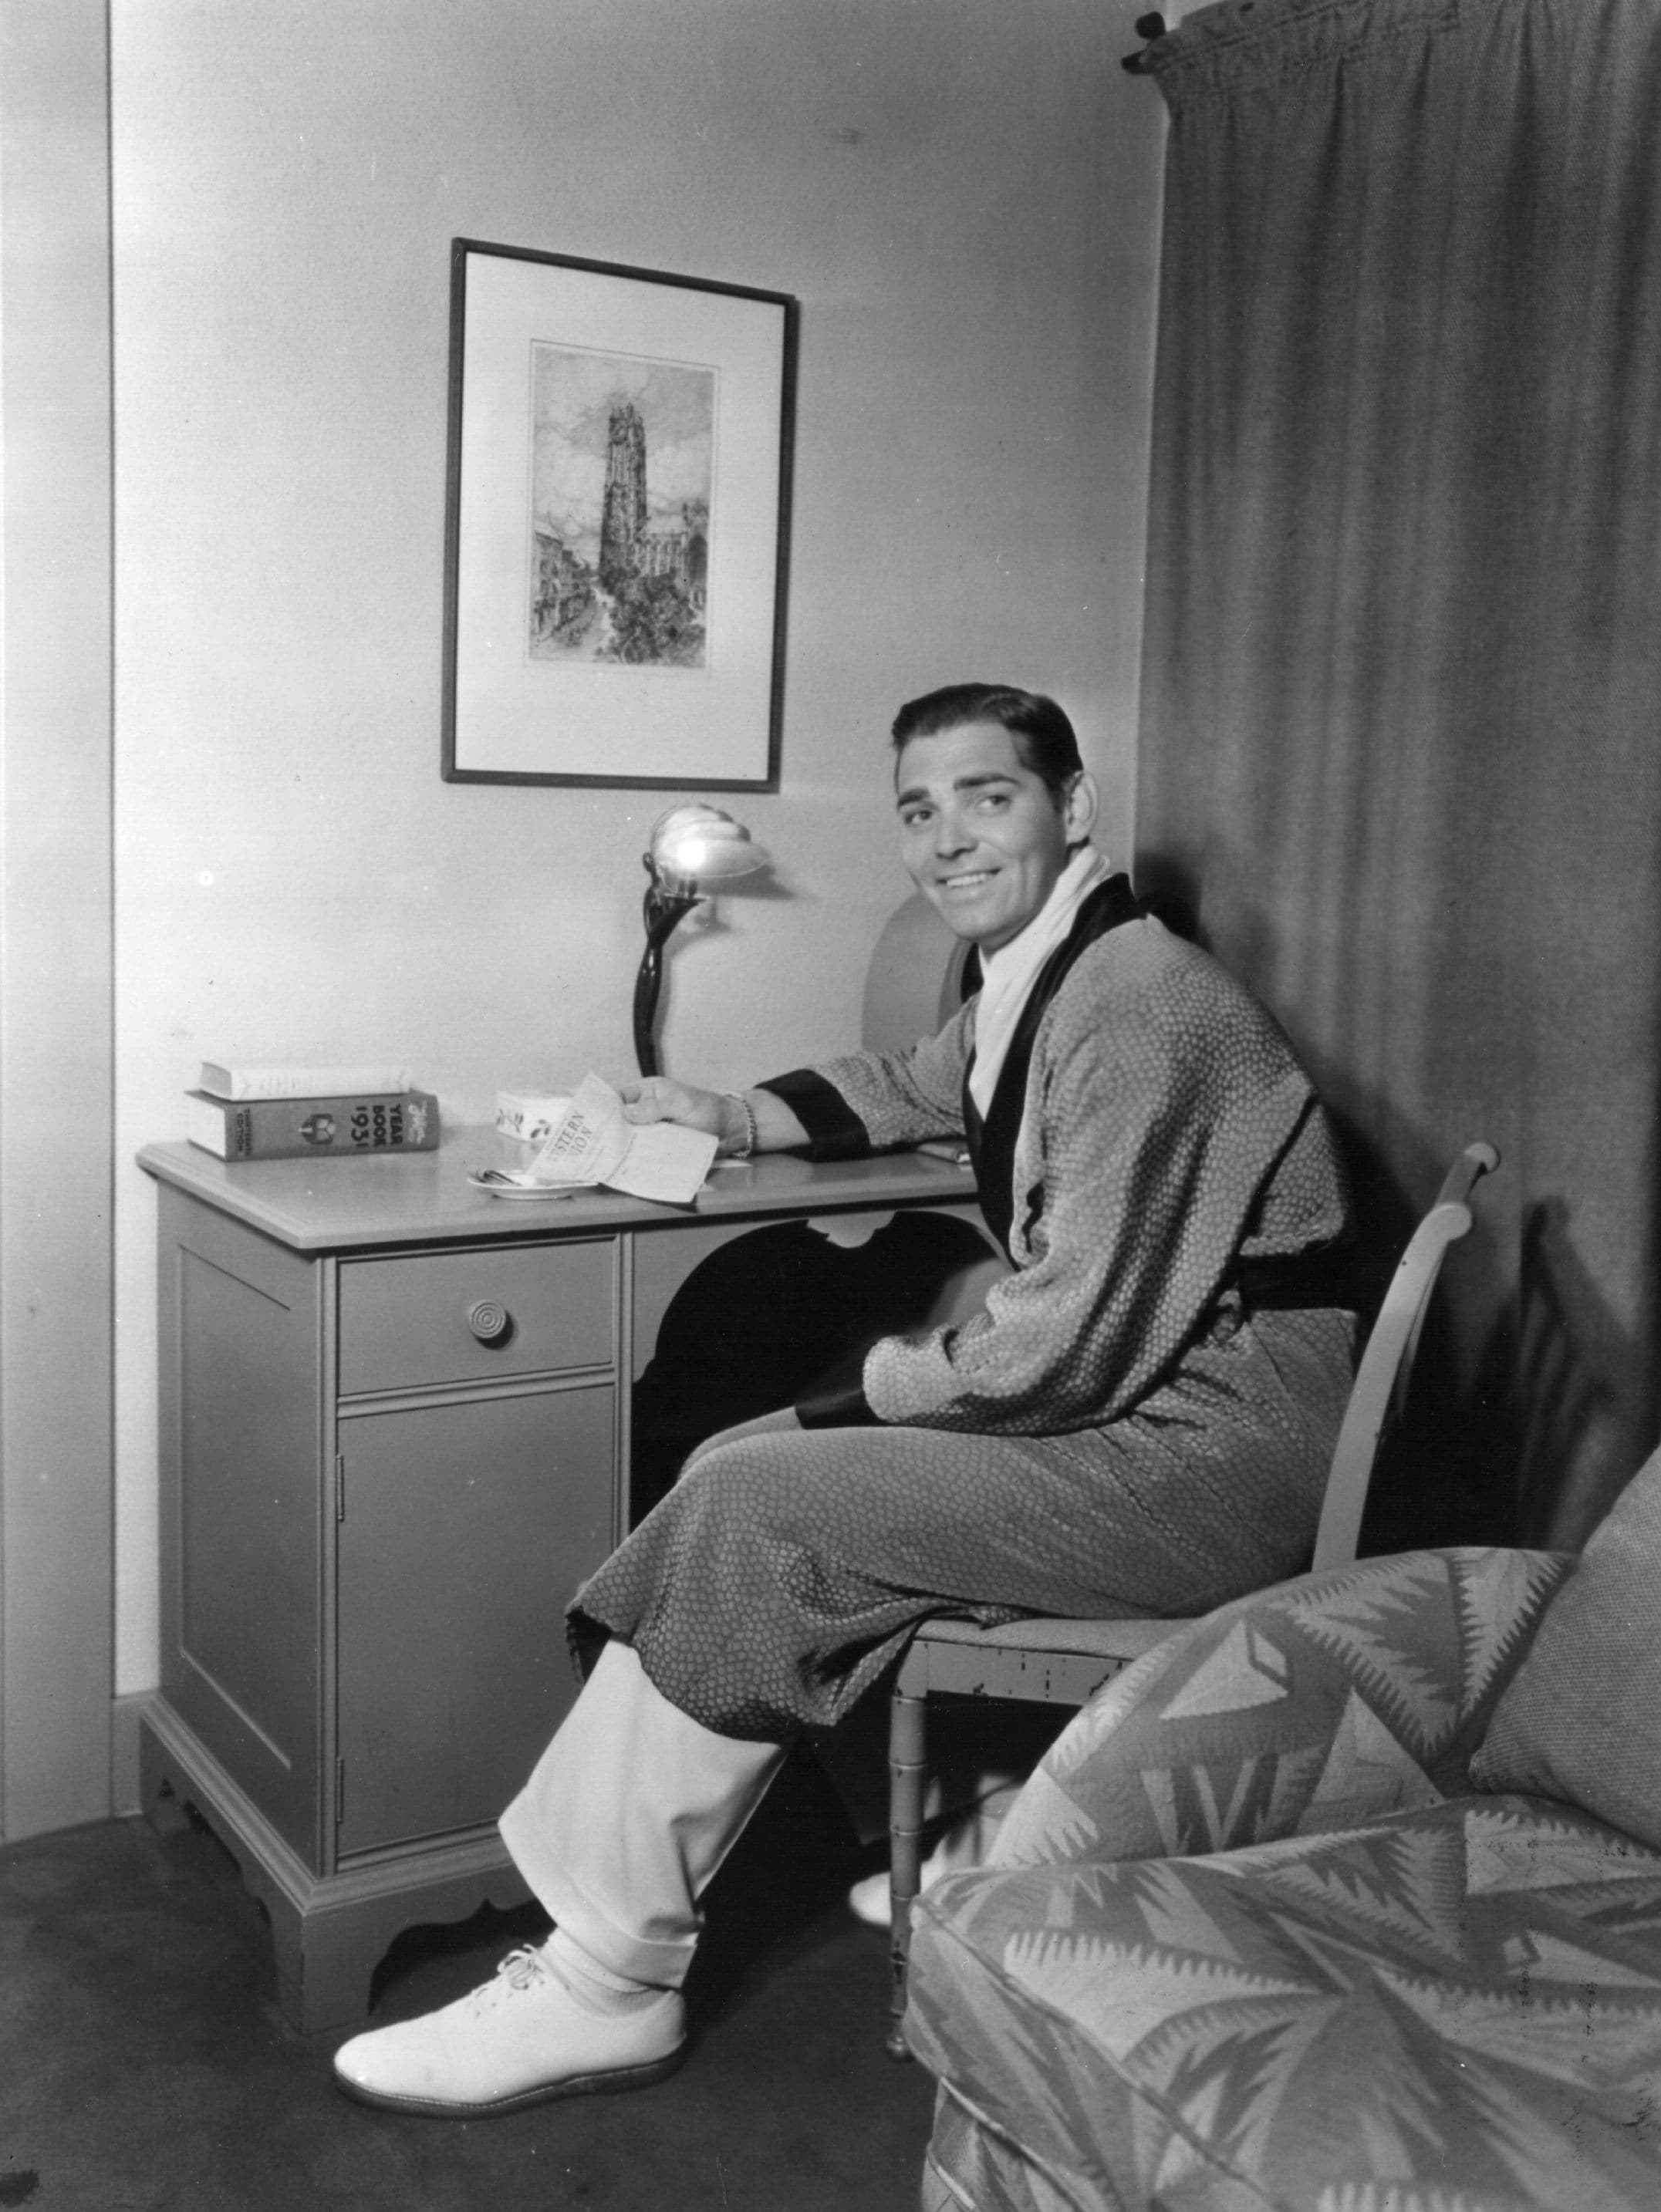 1935. Gable legge le lettere dei fan